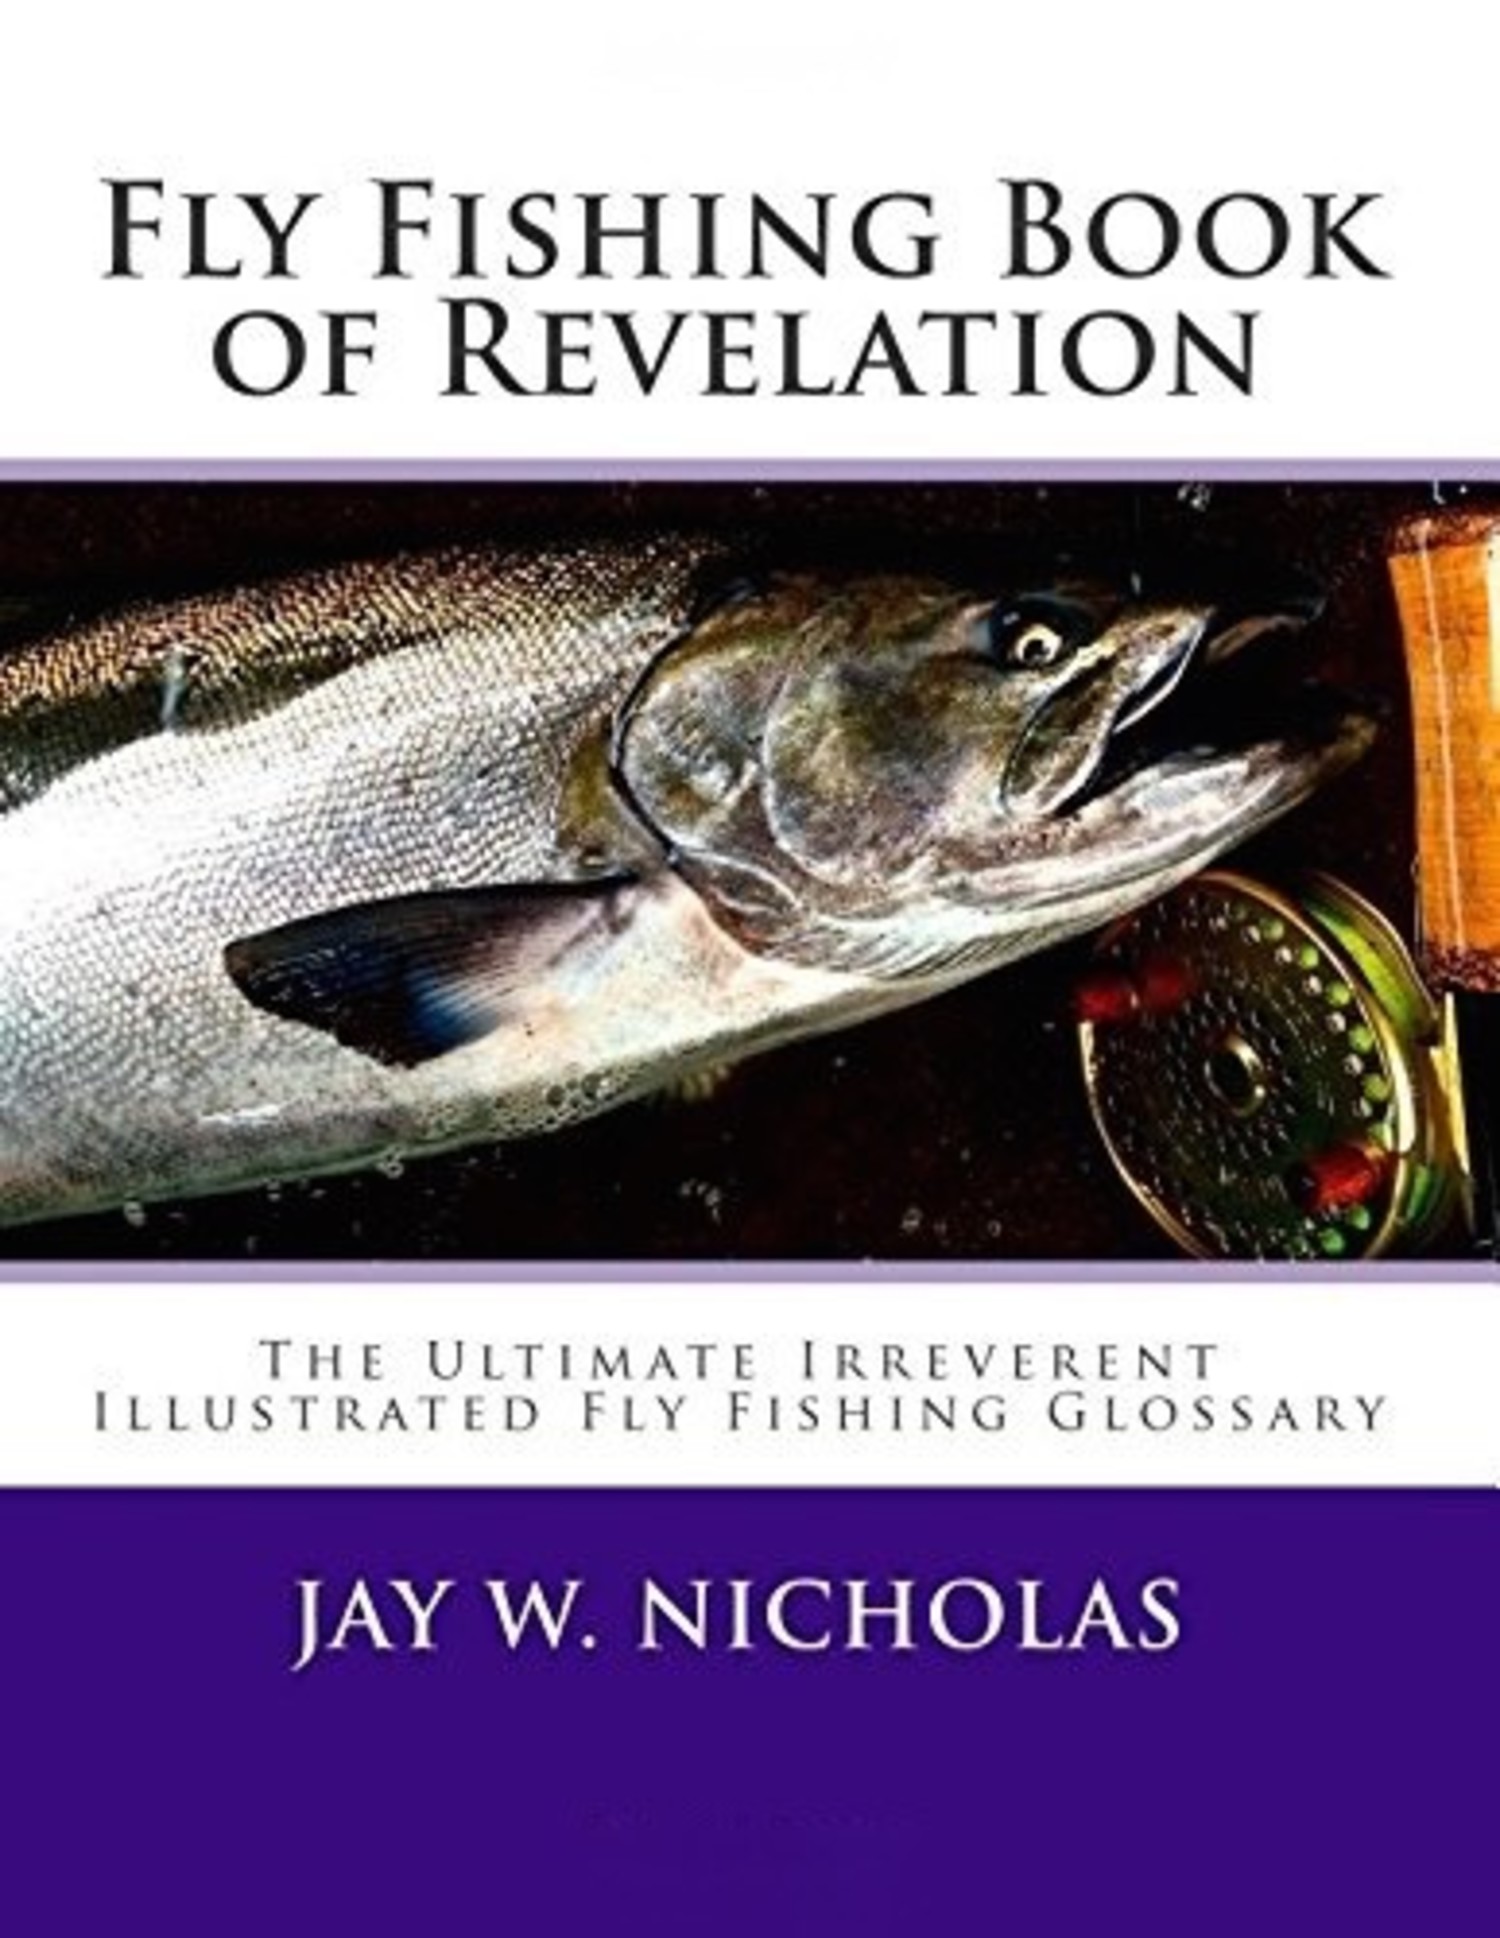 Jay Nicholas Fly Fishing Book of Revelation, By Jay Nicholas